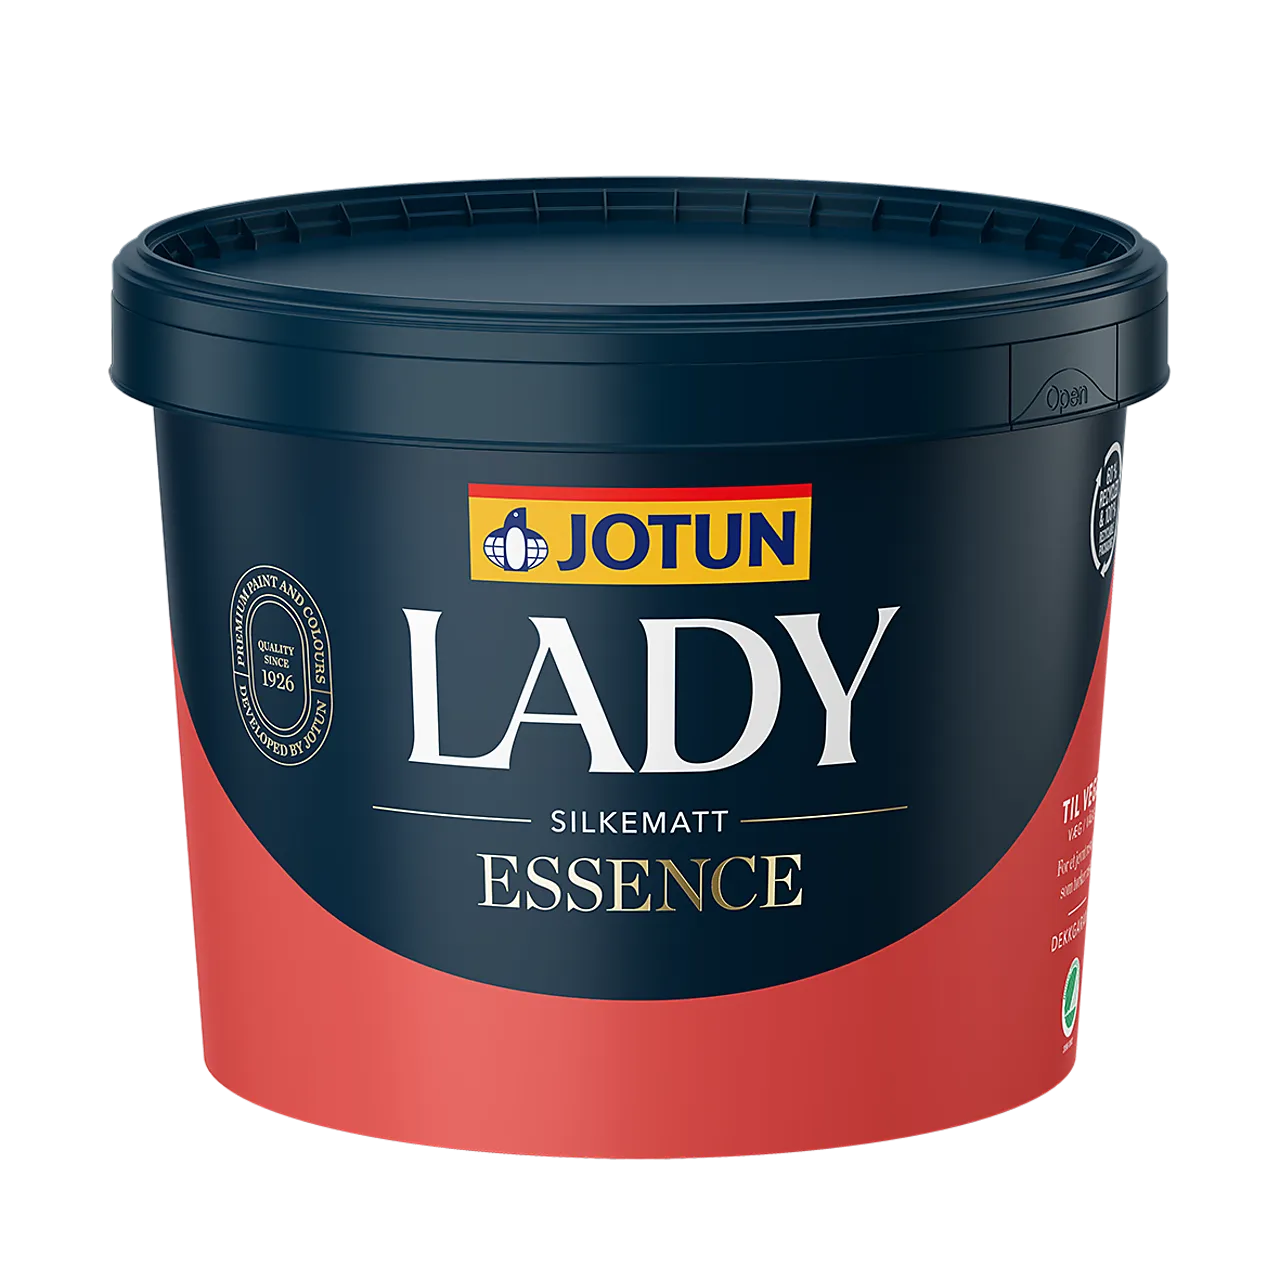 Lady Essence interiørmaling hvit 2,7 liter